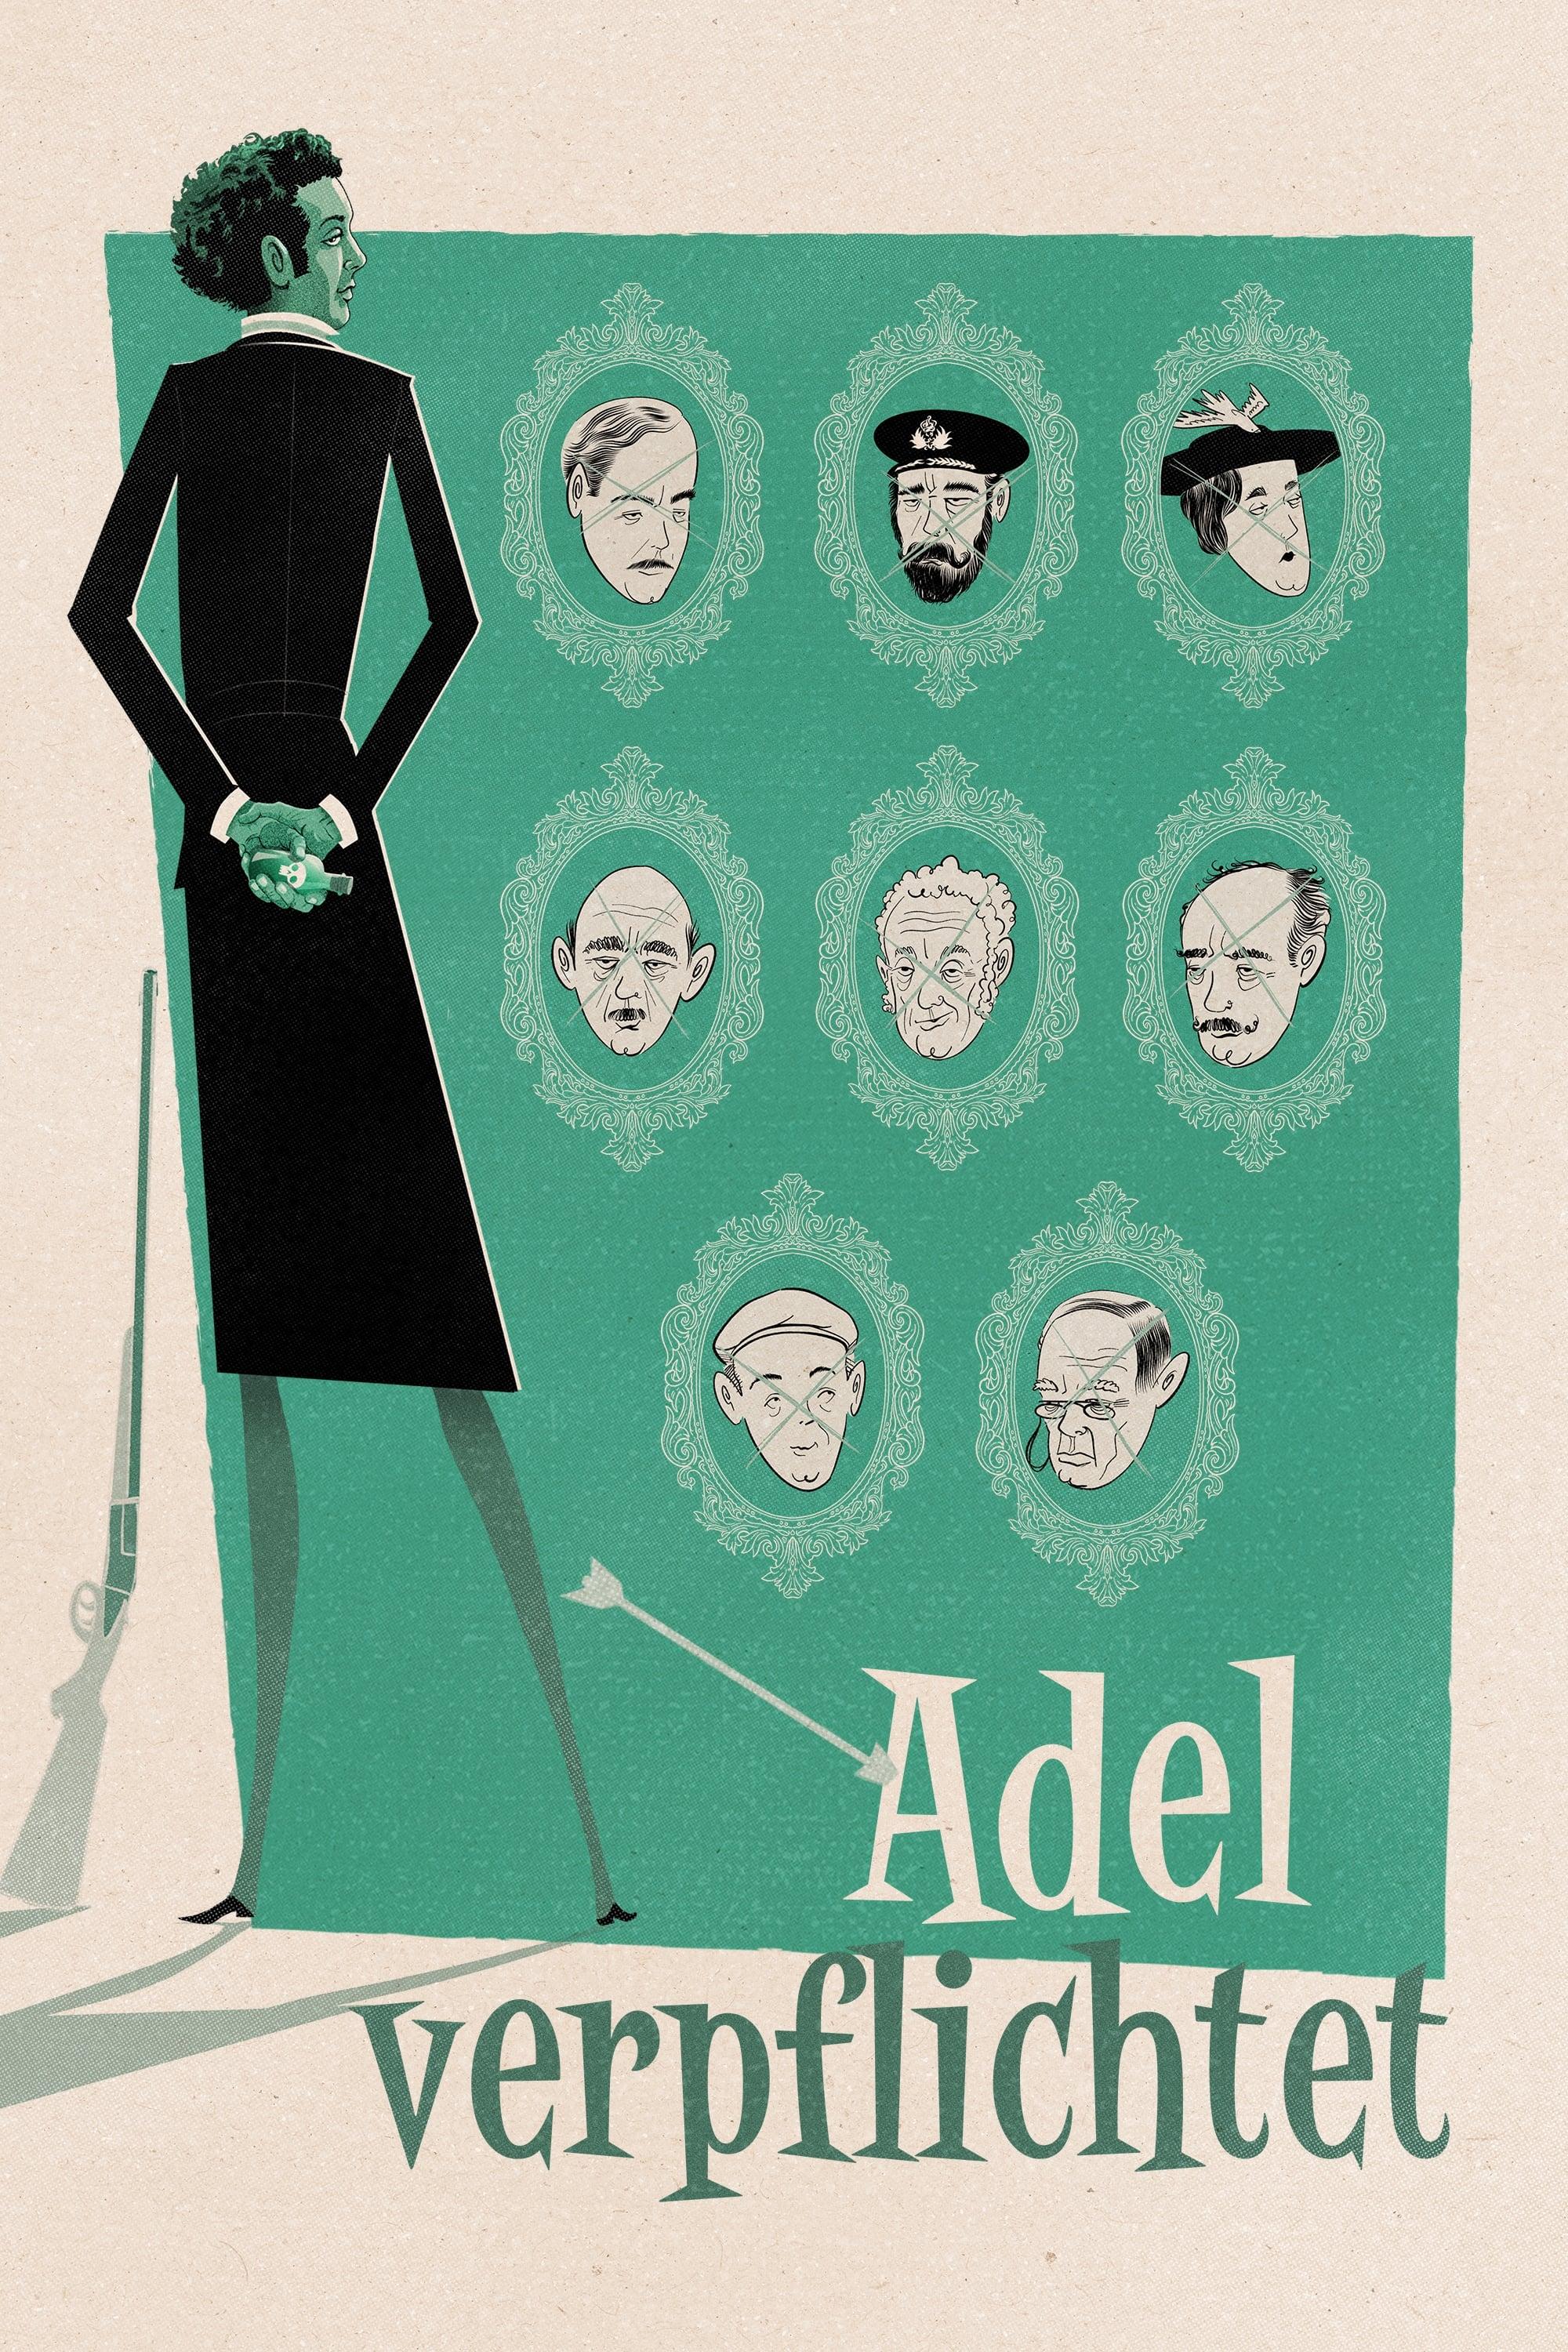 Adel verpflichtet poster